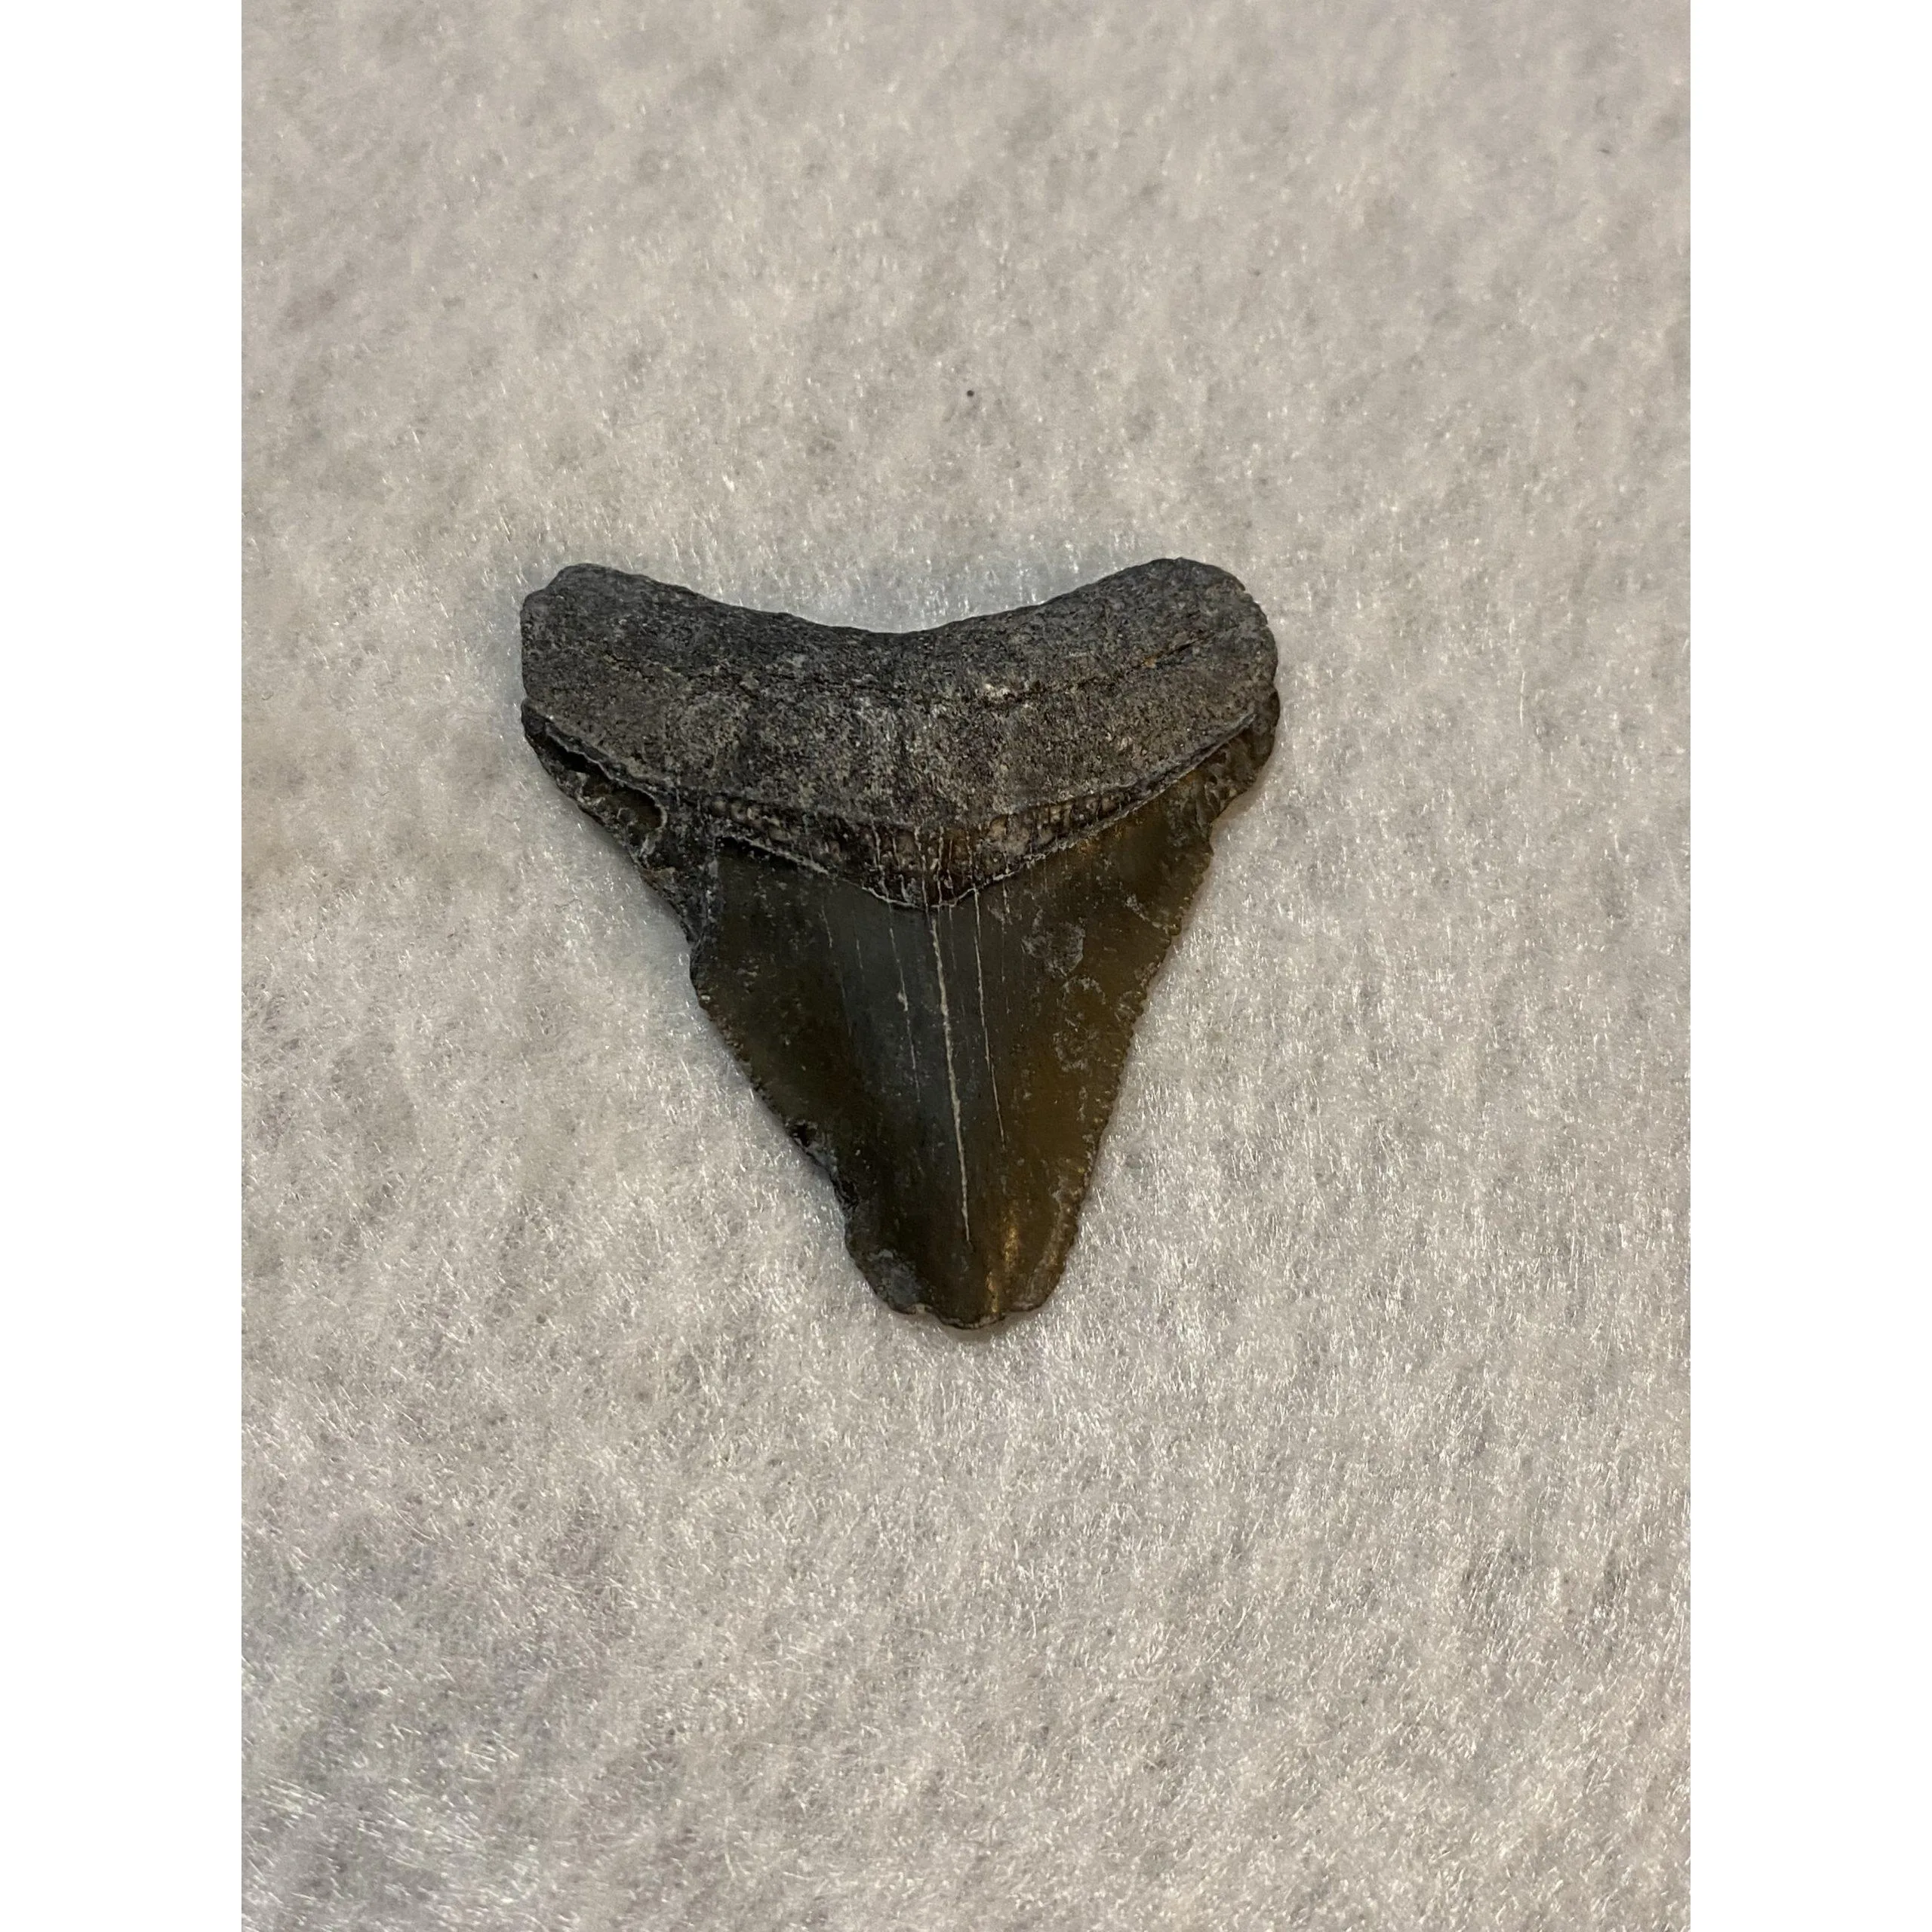 Megalodon Tooth, Bone Valley, Florida, 2.15 inch Prehistoric Online